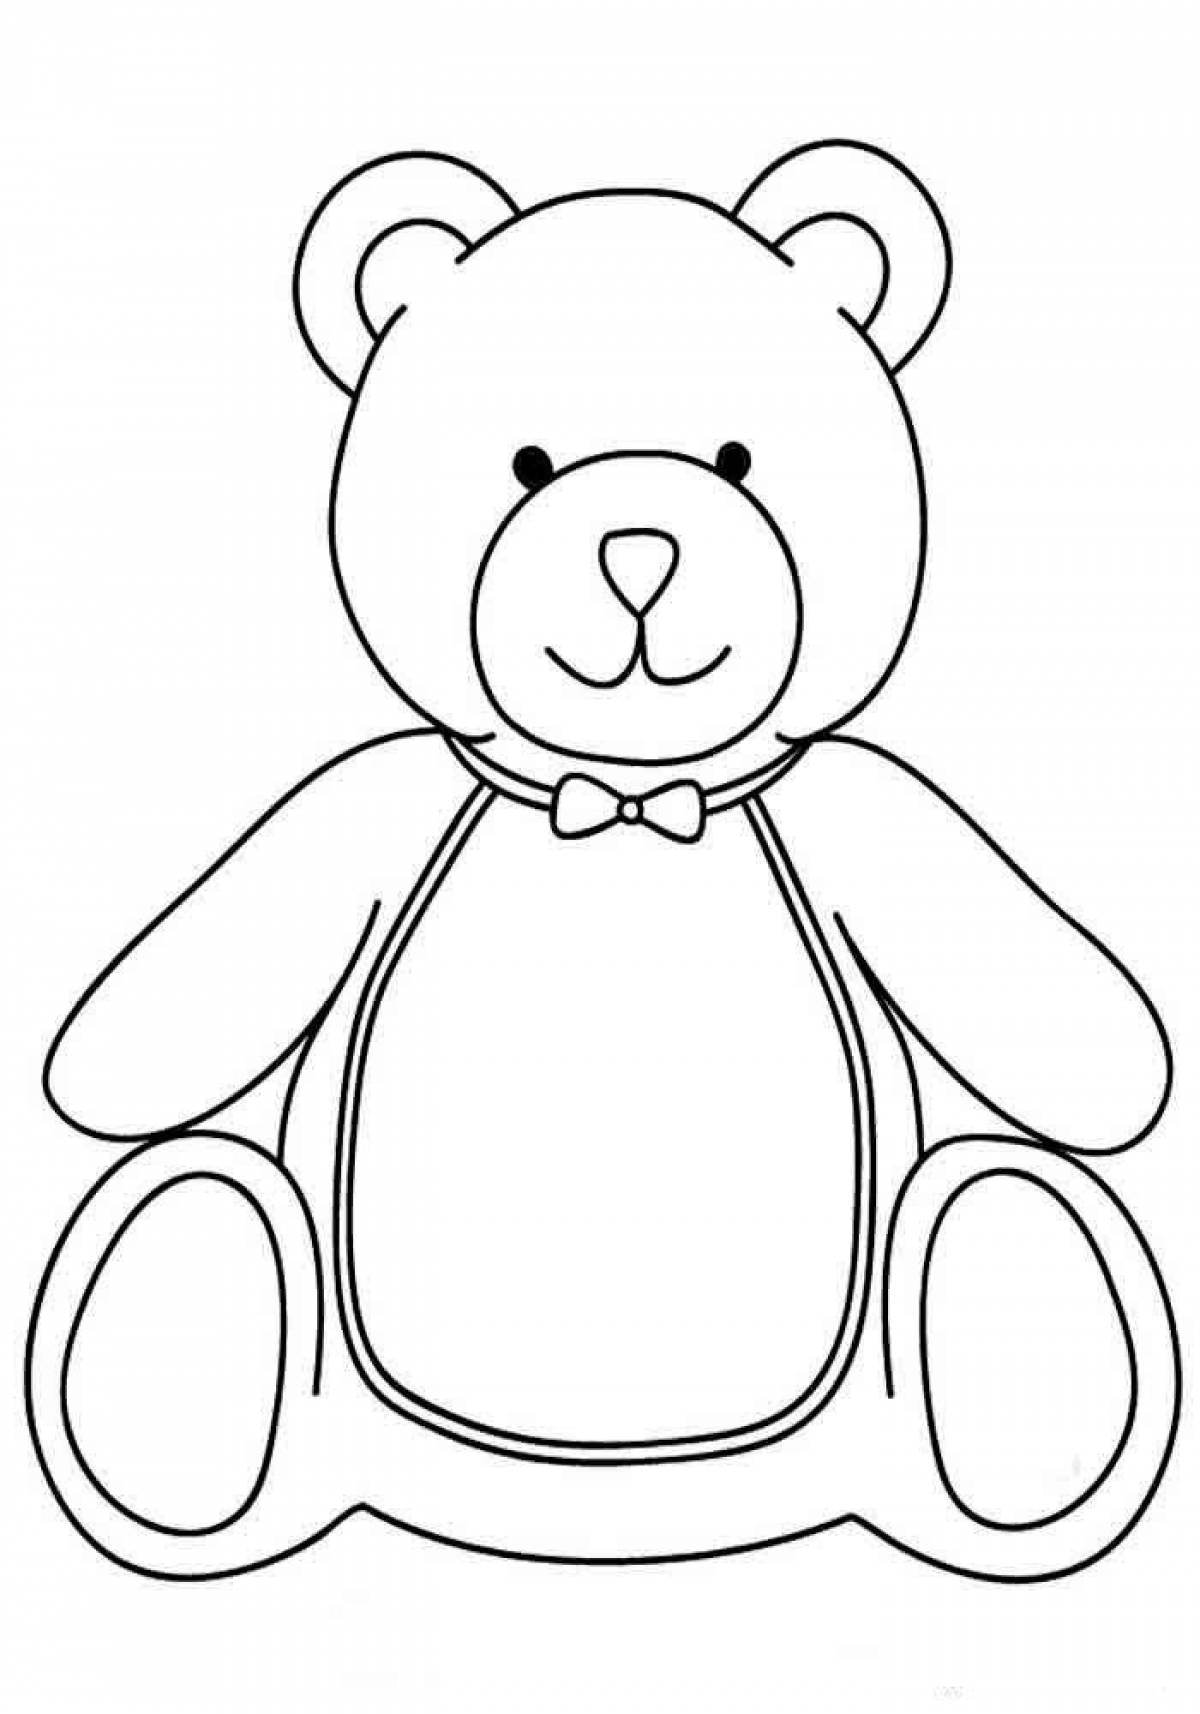 Coloring cute bear for kids